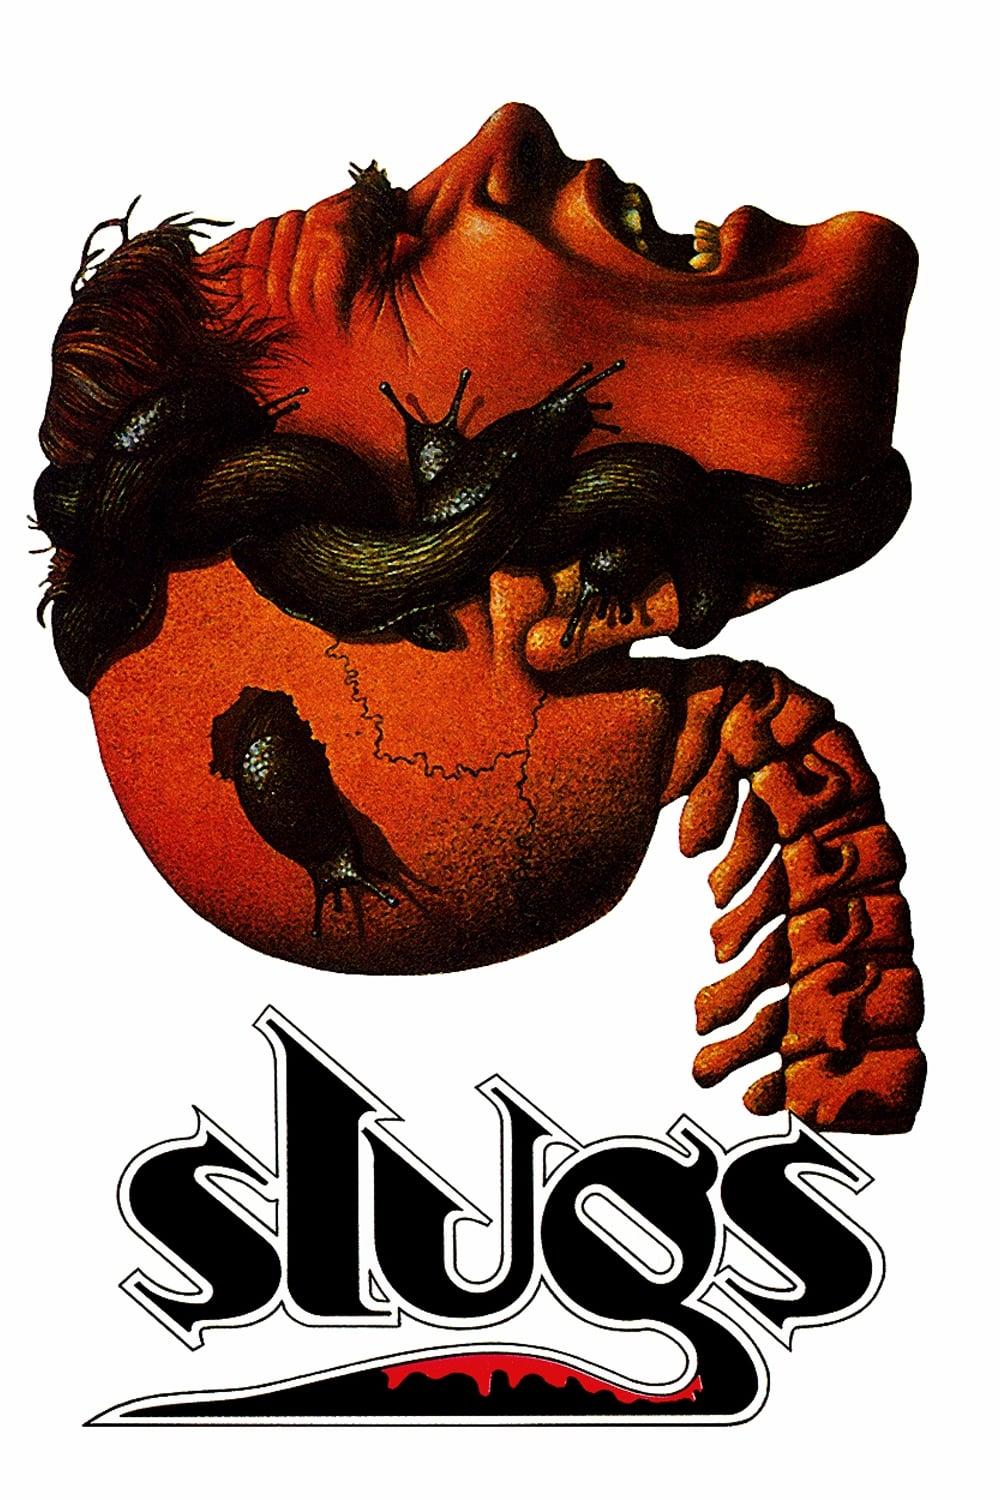 Slugs poster